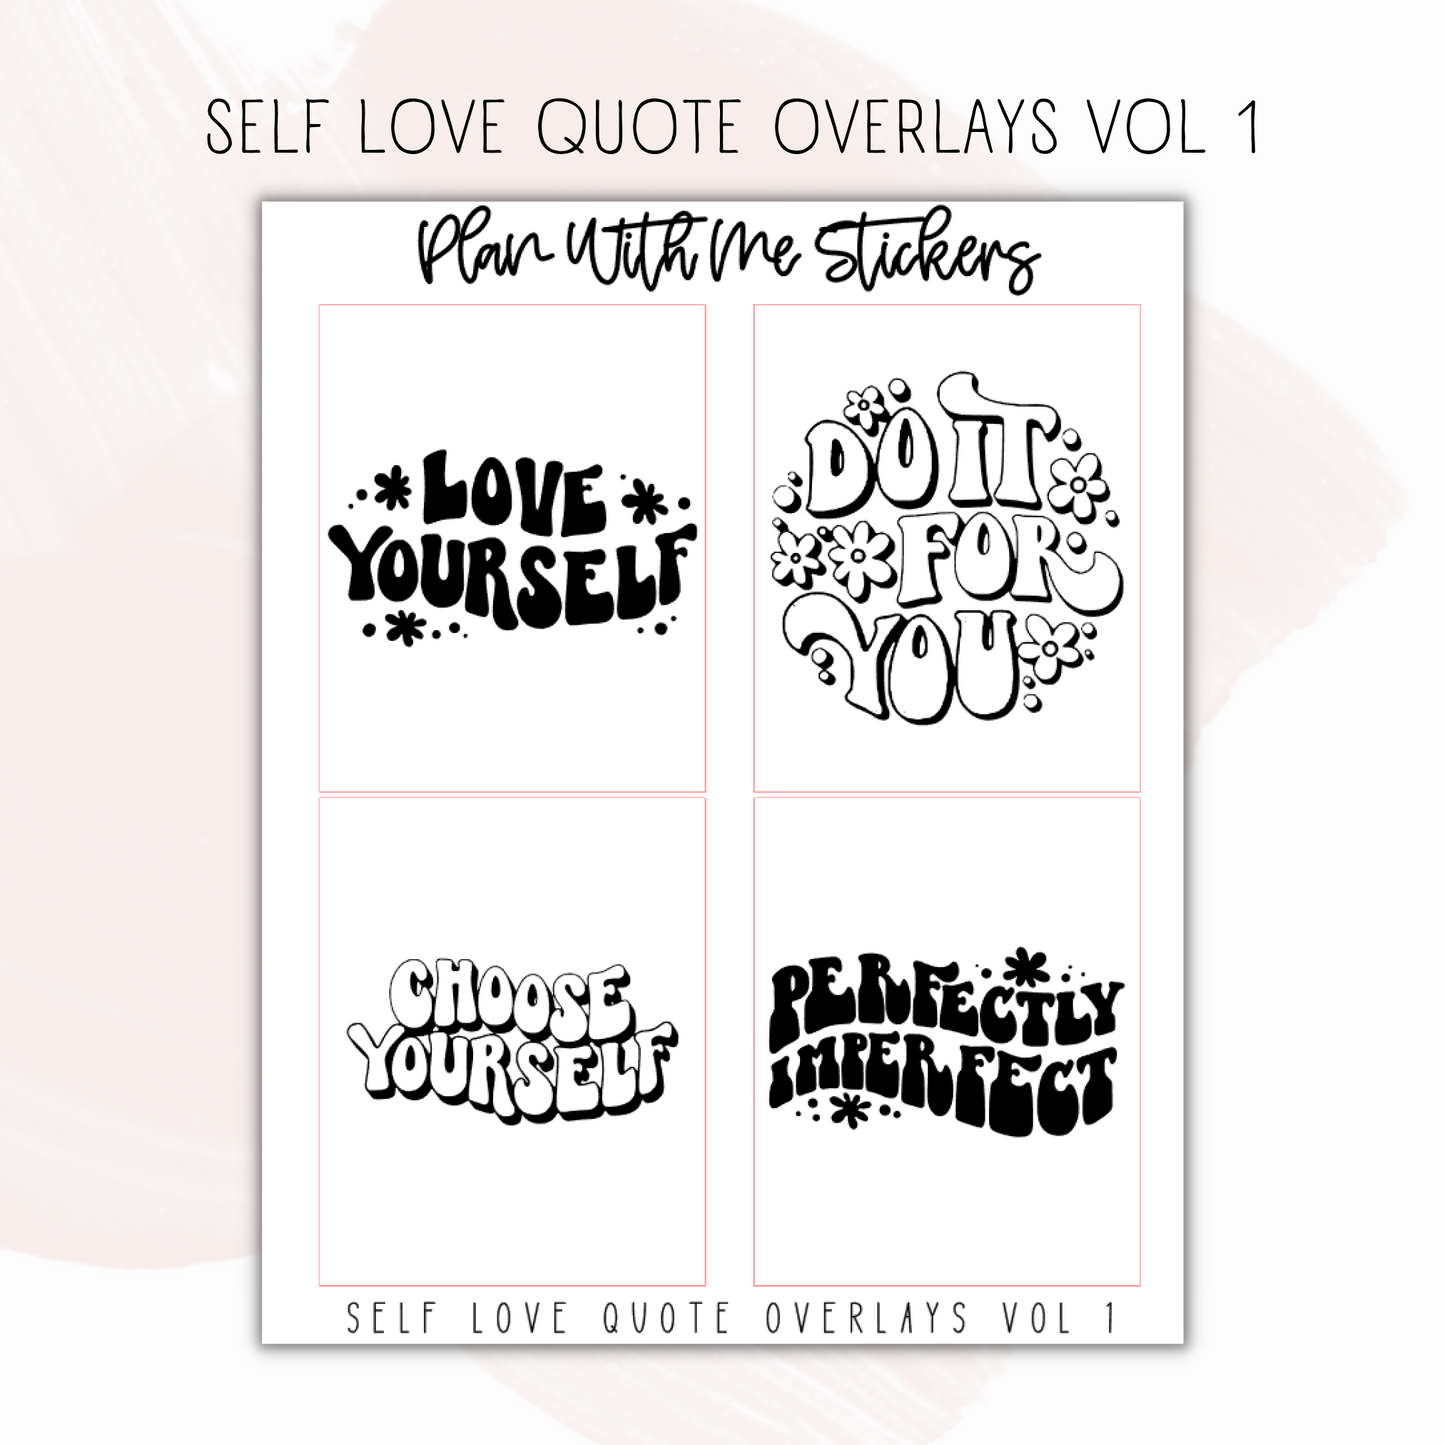 Self Love Quote Overlays Vol 1